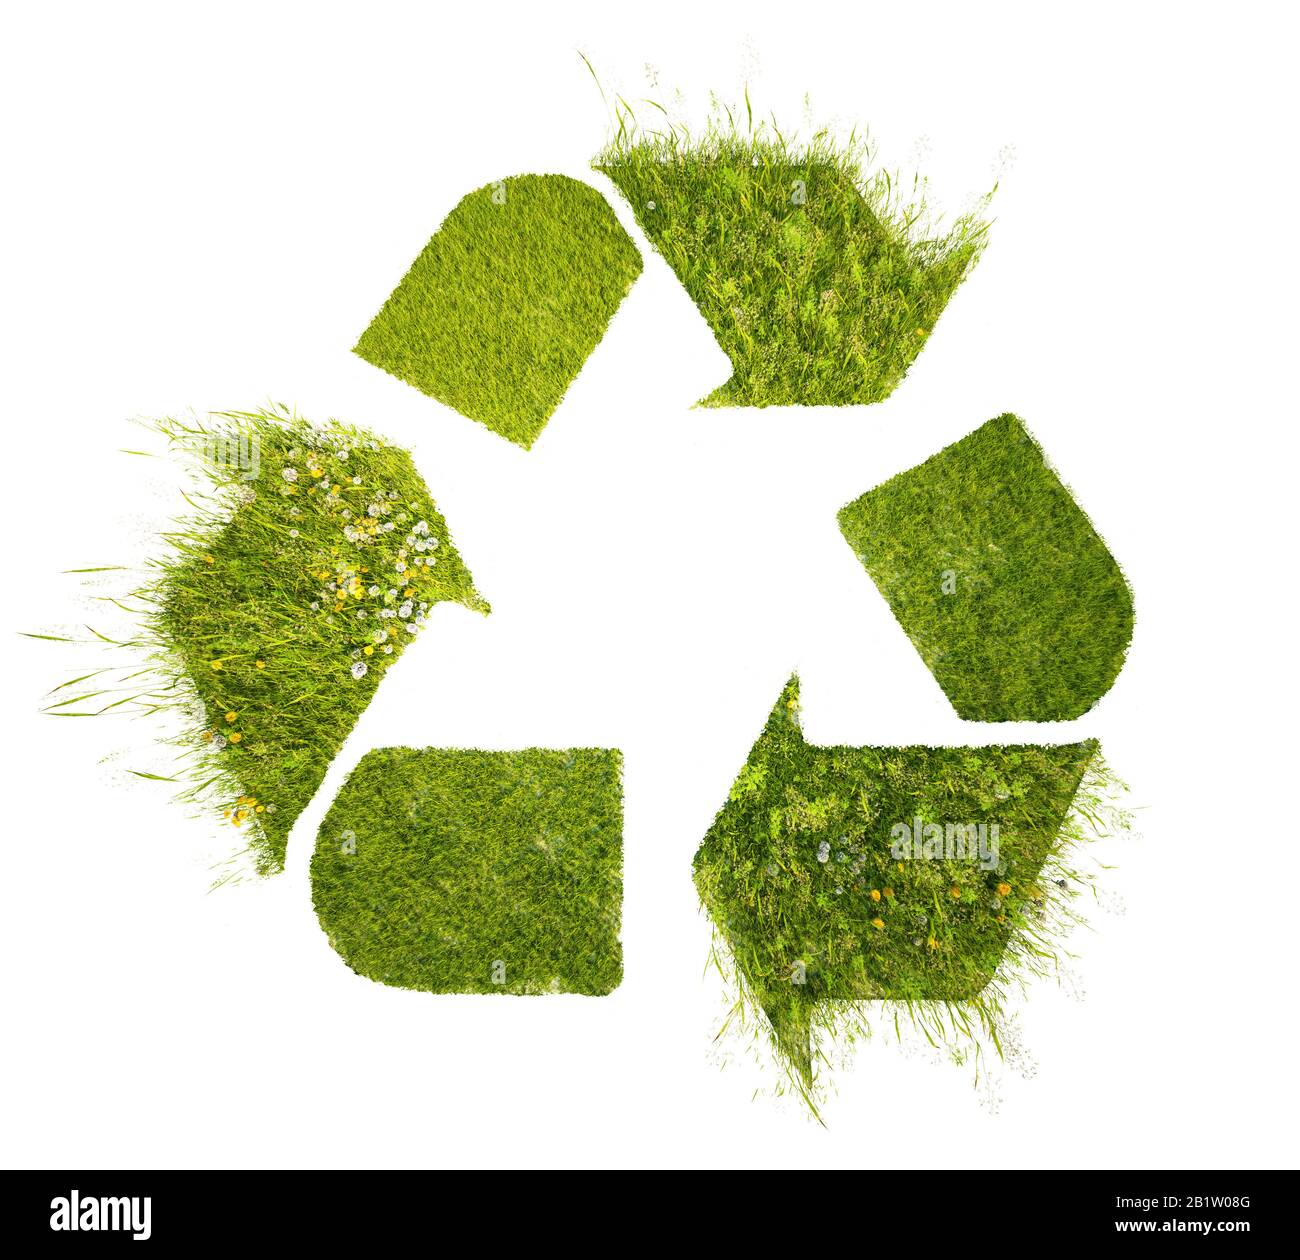 Recycling symbol Grass Field - 3D illustration Stock Photo